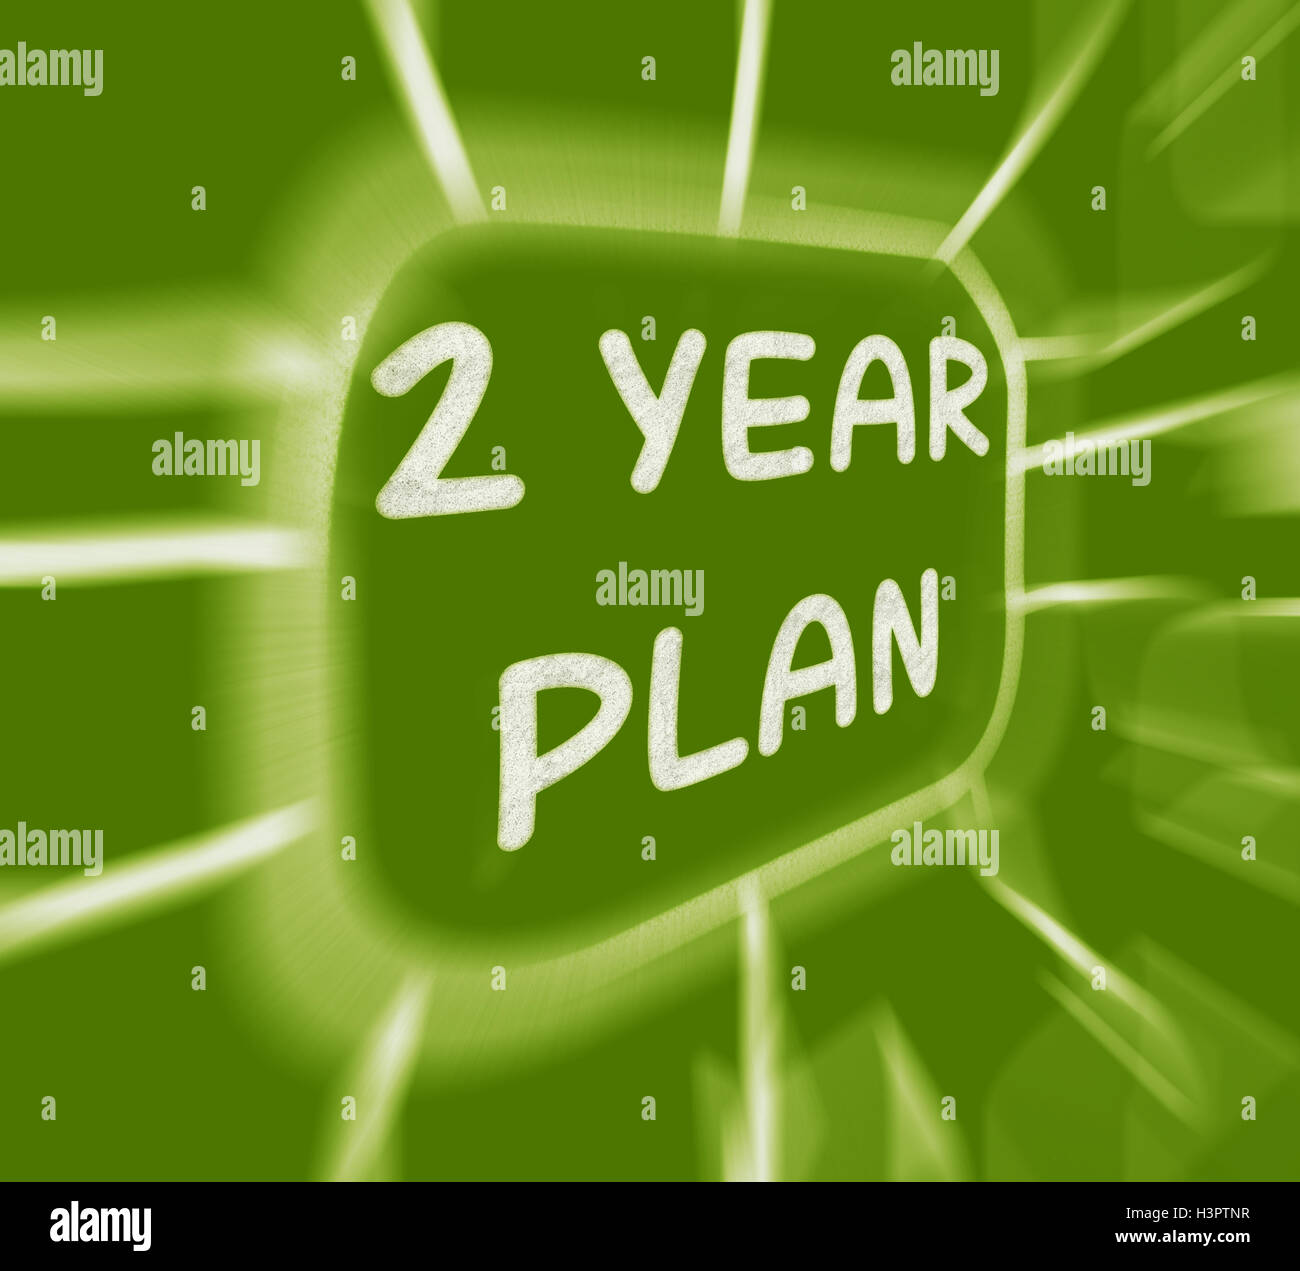 Two Year Plan Diagram Displays 2 Year Planning Stock Photo